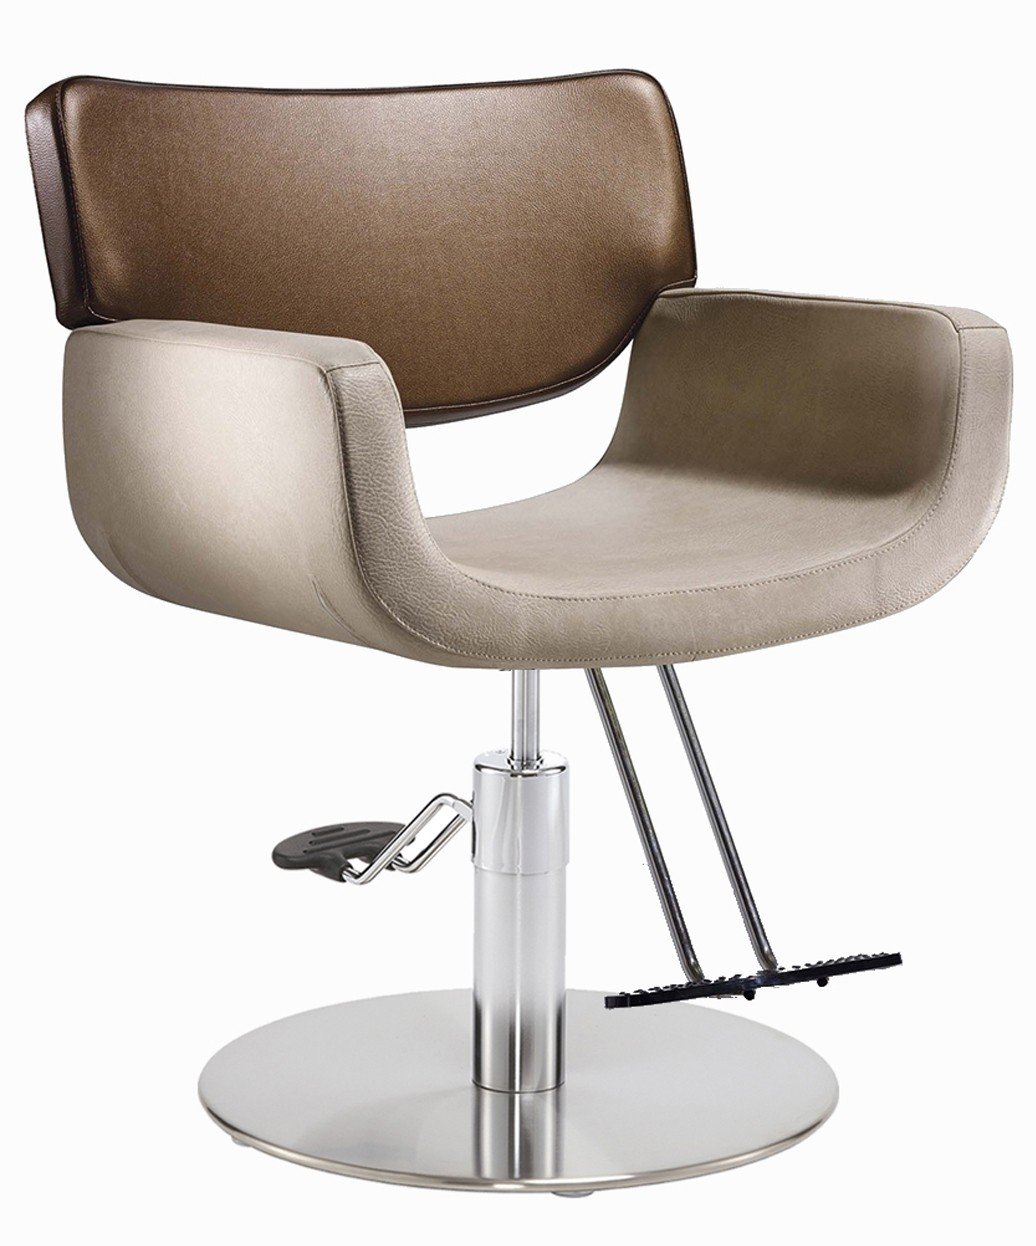 Salon Ambience SH-790 Quadro Styling Chair